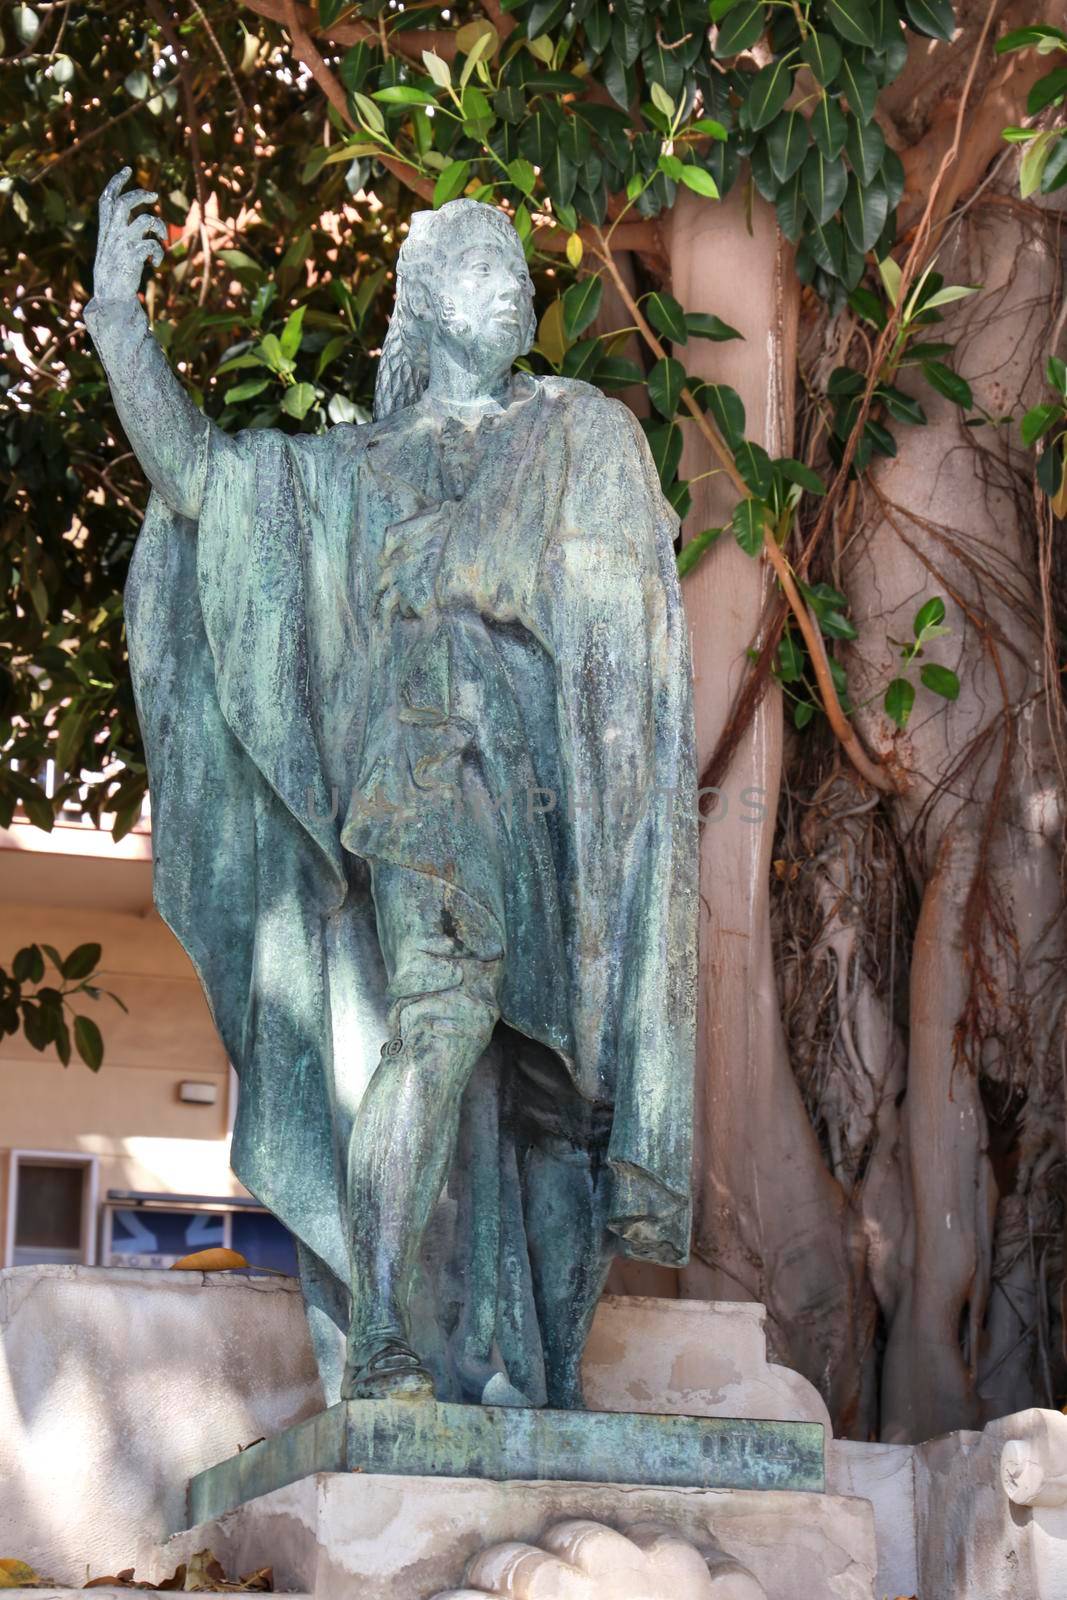 Cartagena, Murcia, Spain- July 17, 2022: Isidoro Maiquez statue at San Francisco Square in Cartagena